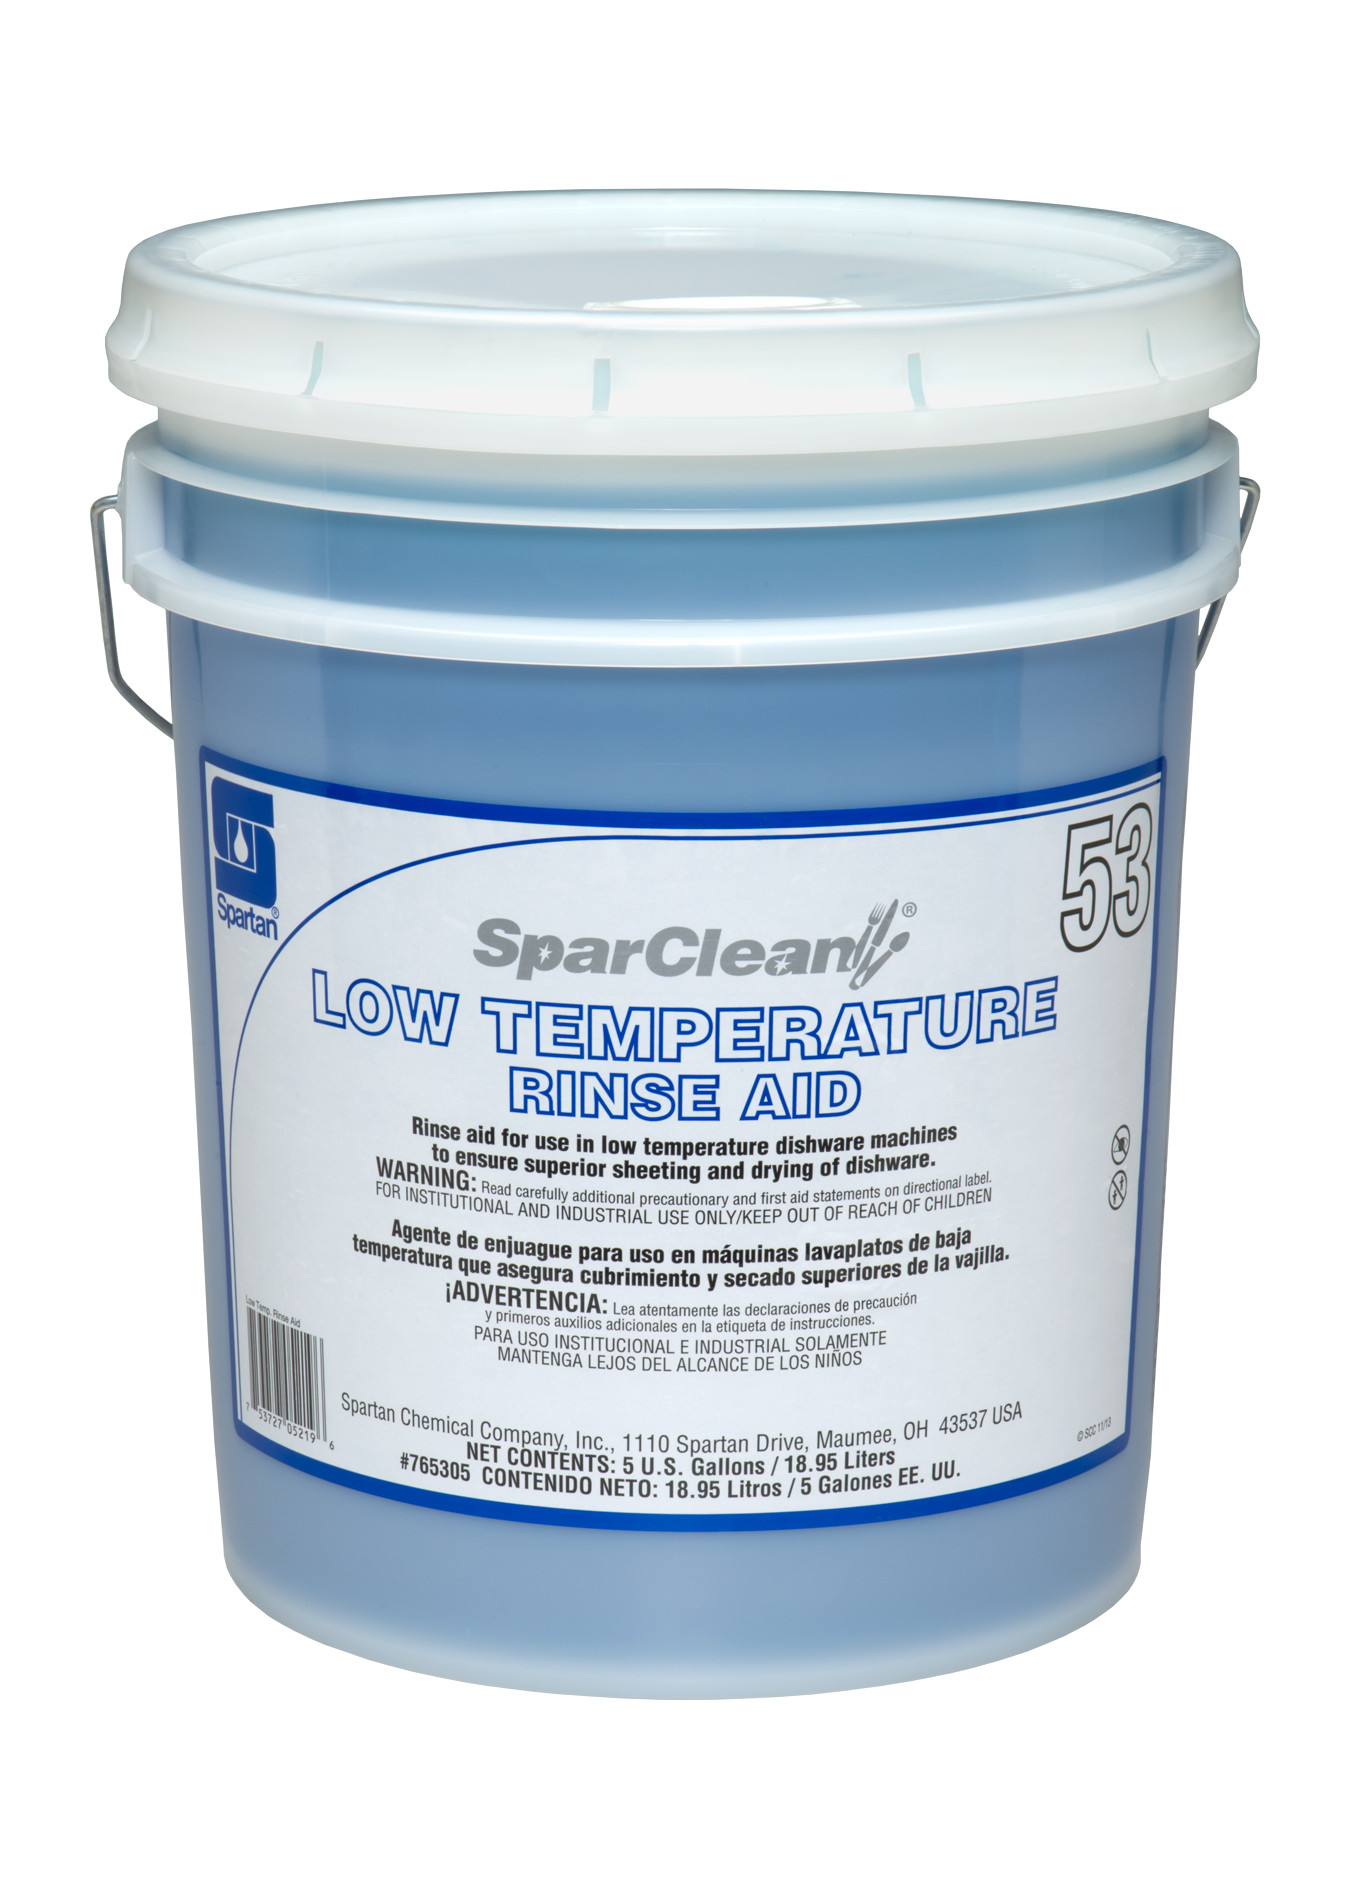 Spartan Chemical Company SparClean Low Temperature Rinse Aid 53, 5 GAL PAIL